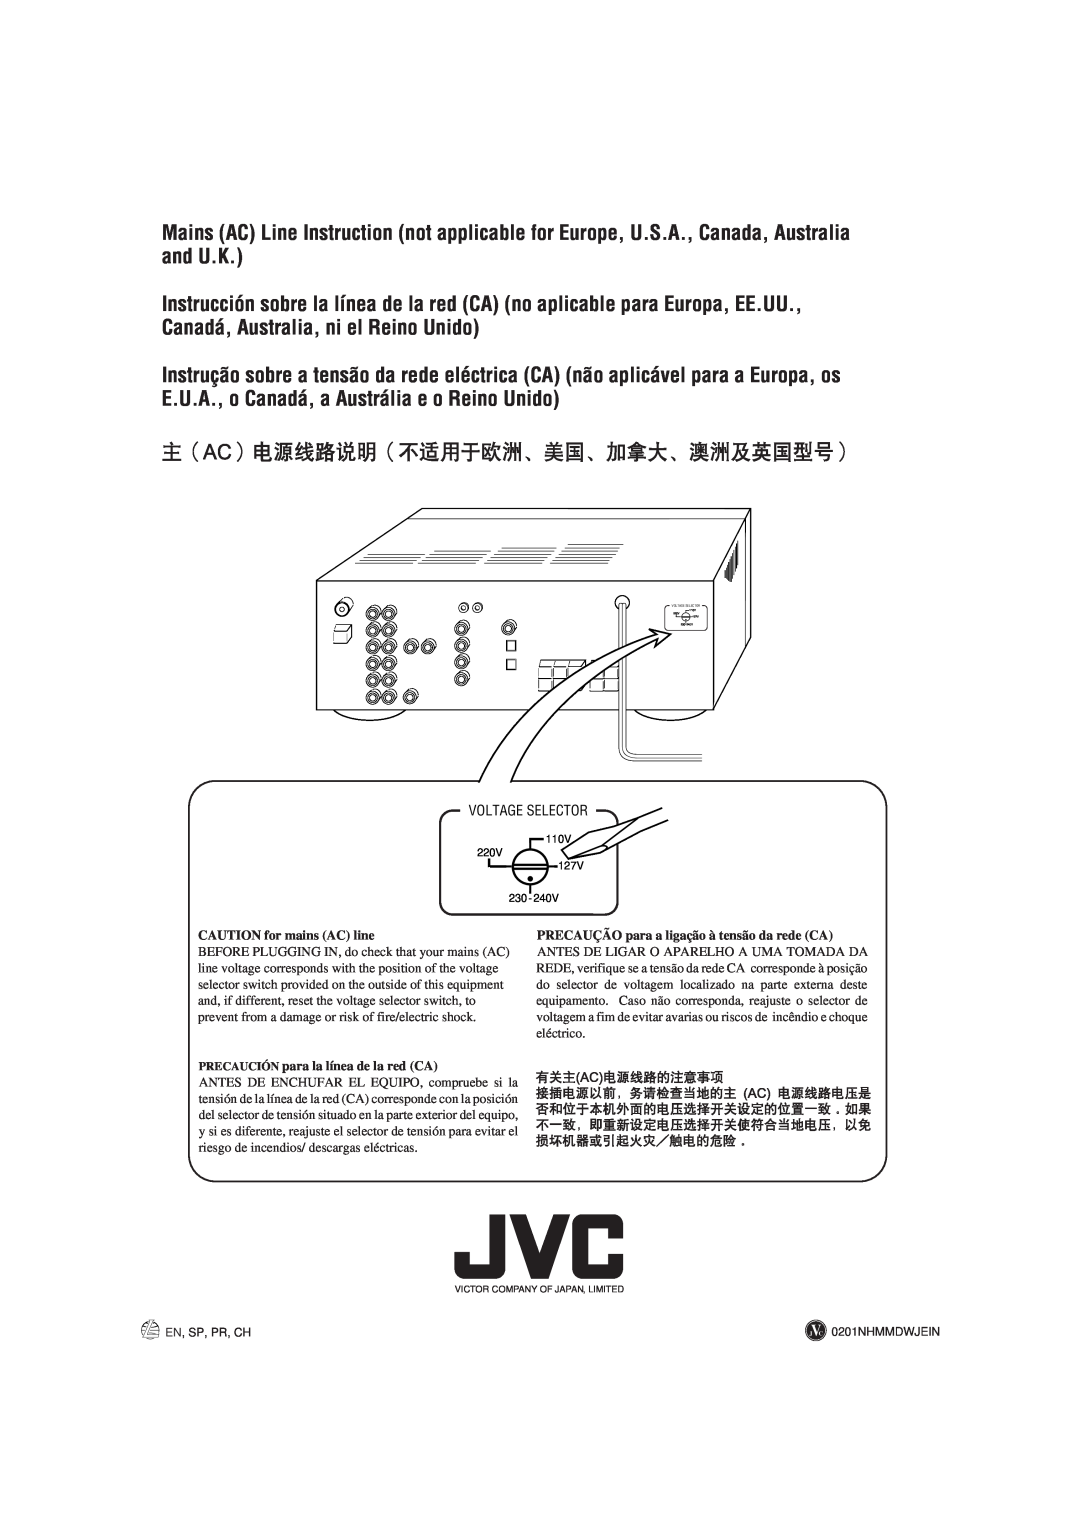 JVC RX-6012VSL manual CAUTION for mains AC line, PRECAUCIÓN para la línea de la red CA, En, Sp, Pr, Ch, V 0201NHMMDWJEIN 